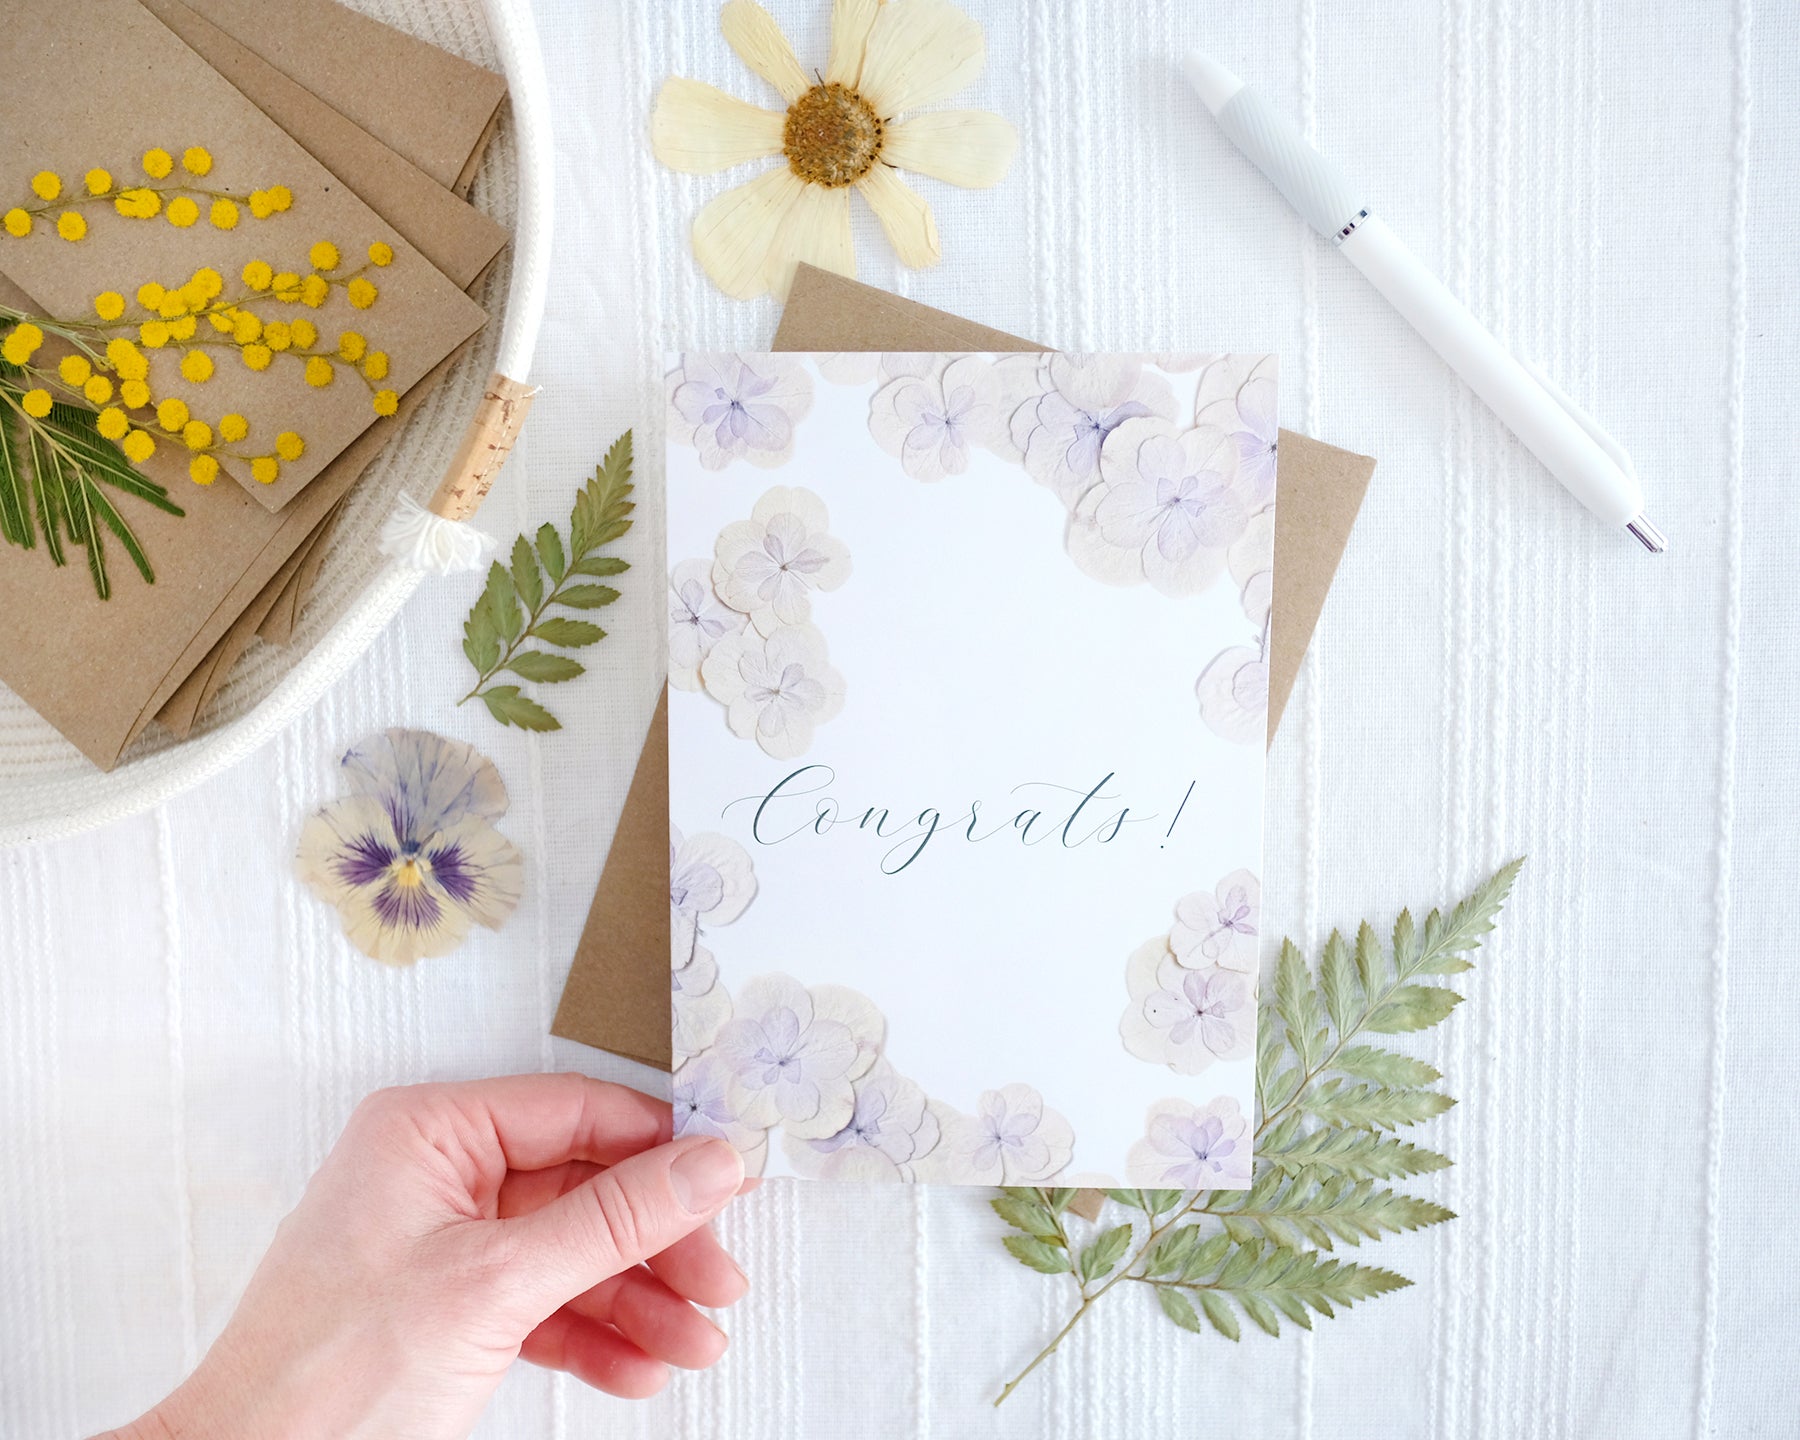 congrats! card with purple hydrangea blossoms